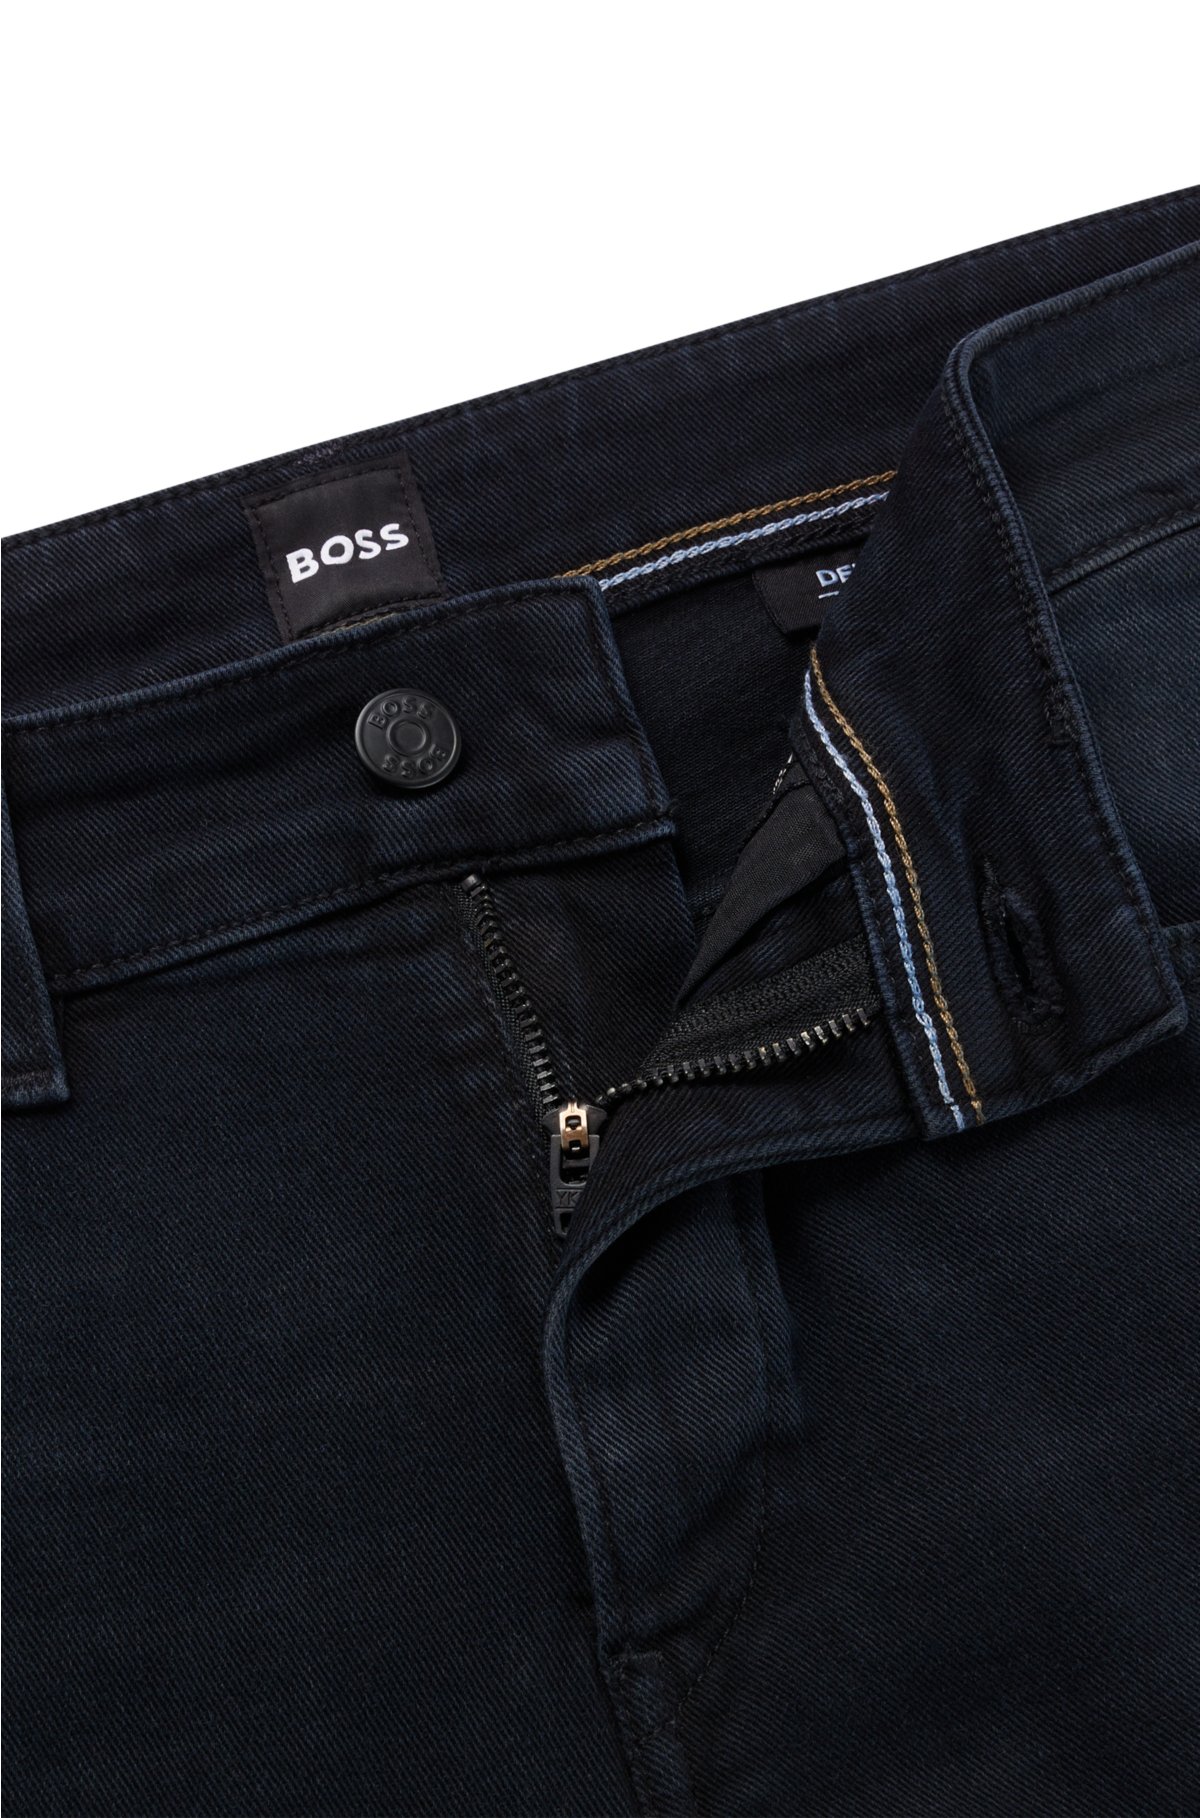 BOSS - Slim-fit jeans in super-soft blue Italian denim